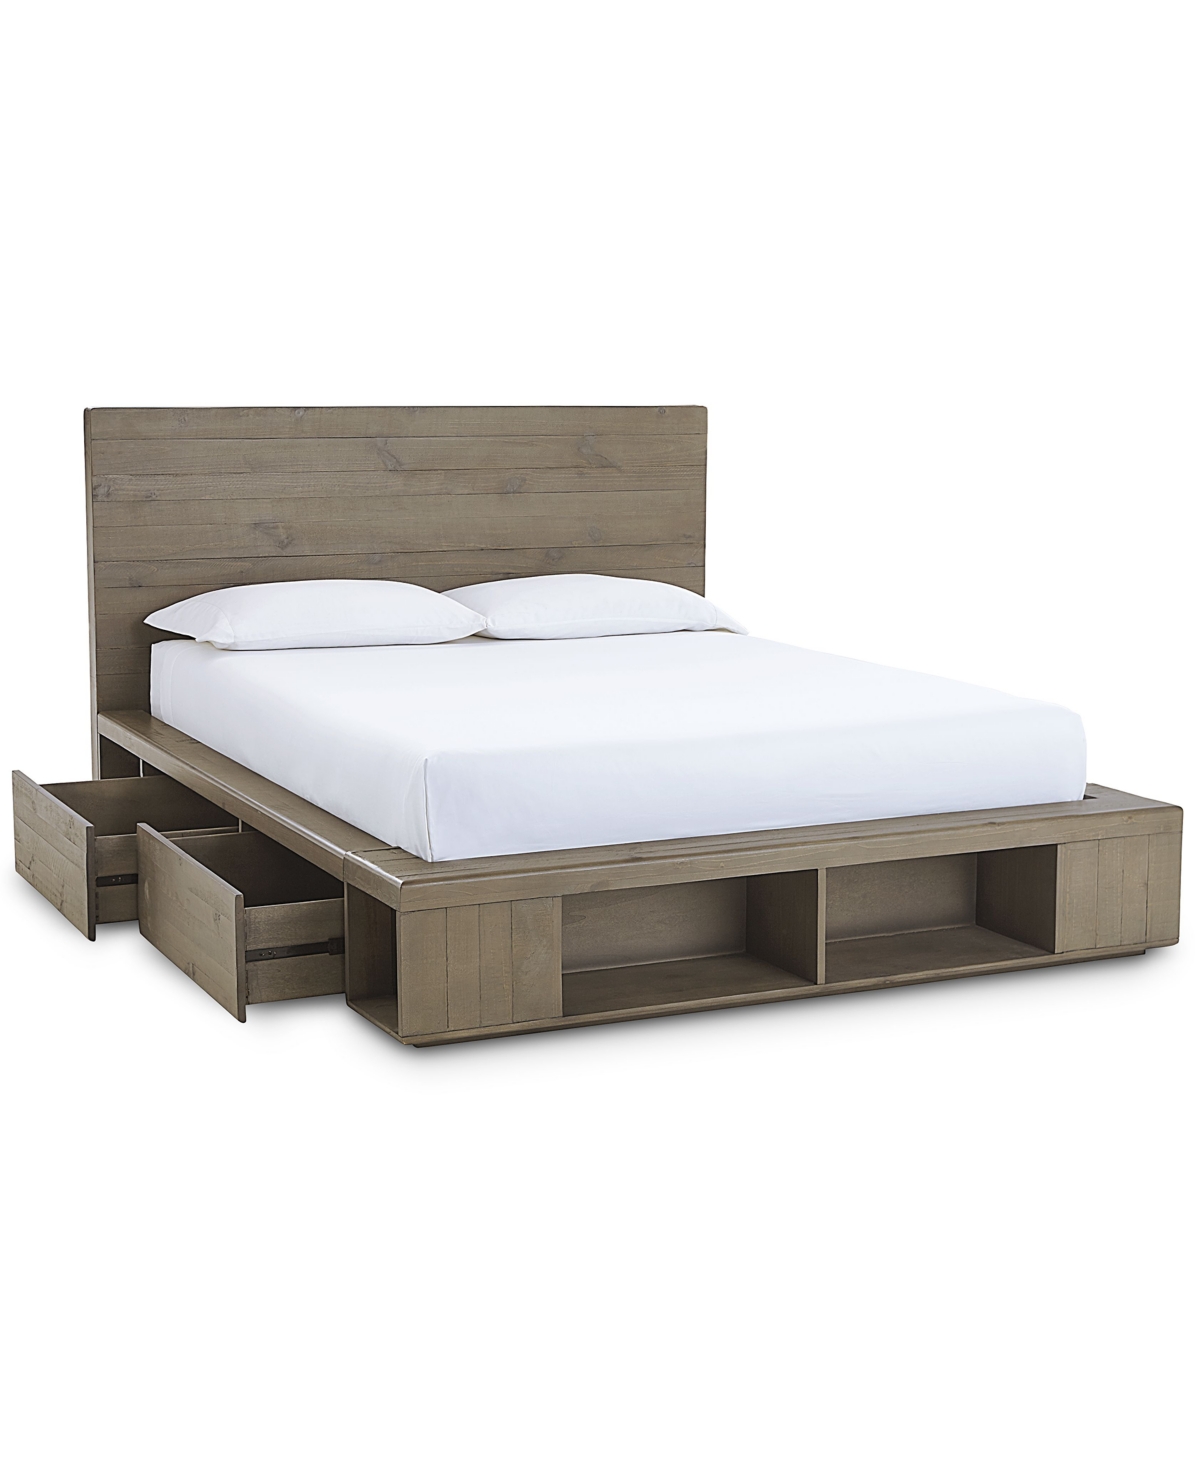 Brandon Storage Full Platform Bed, Created for Macys